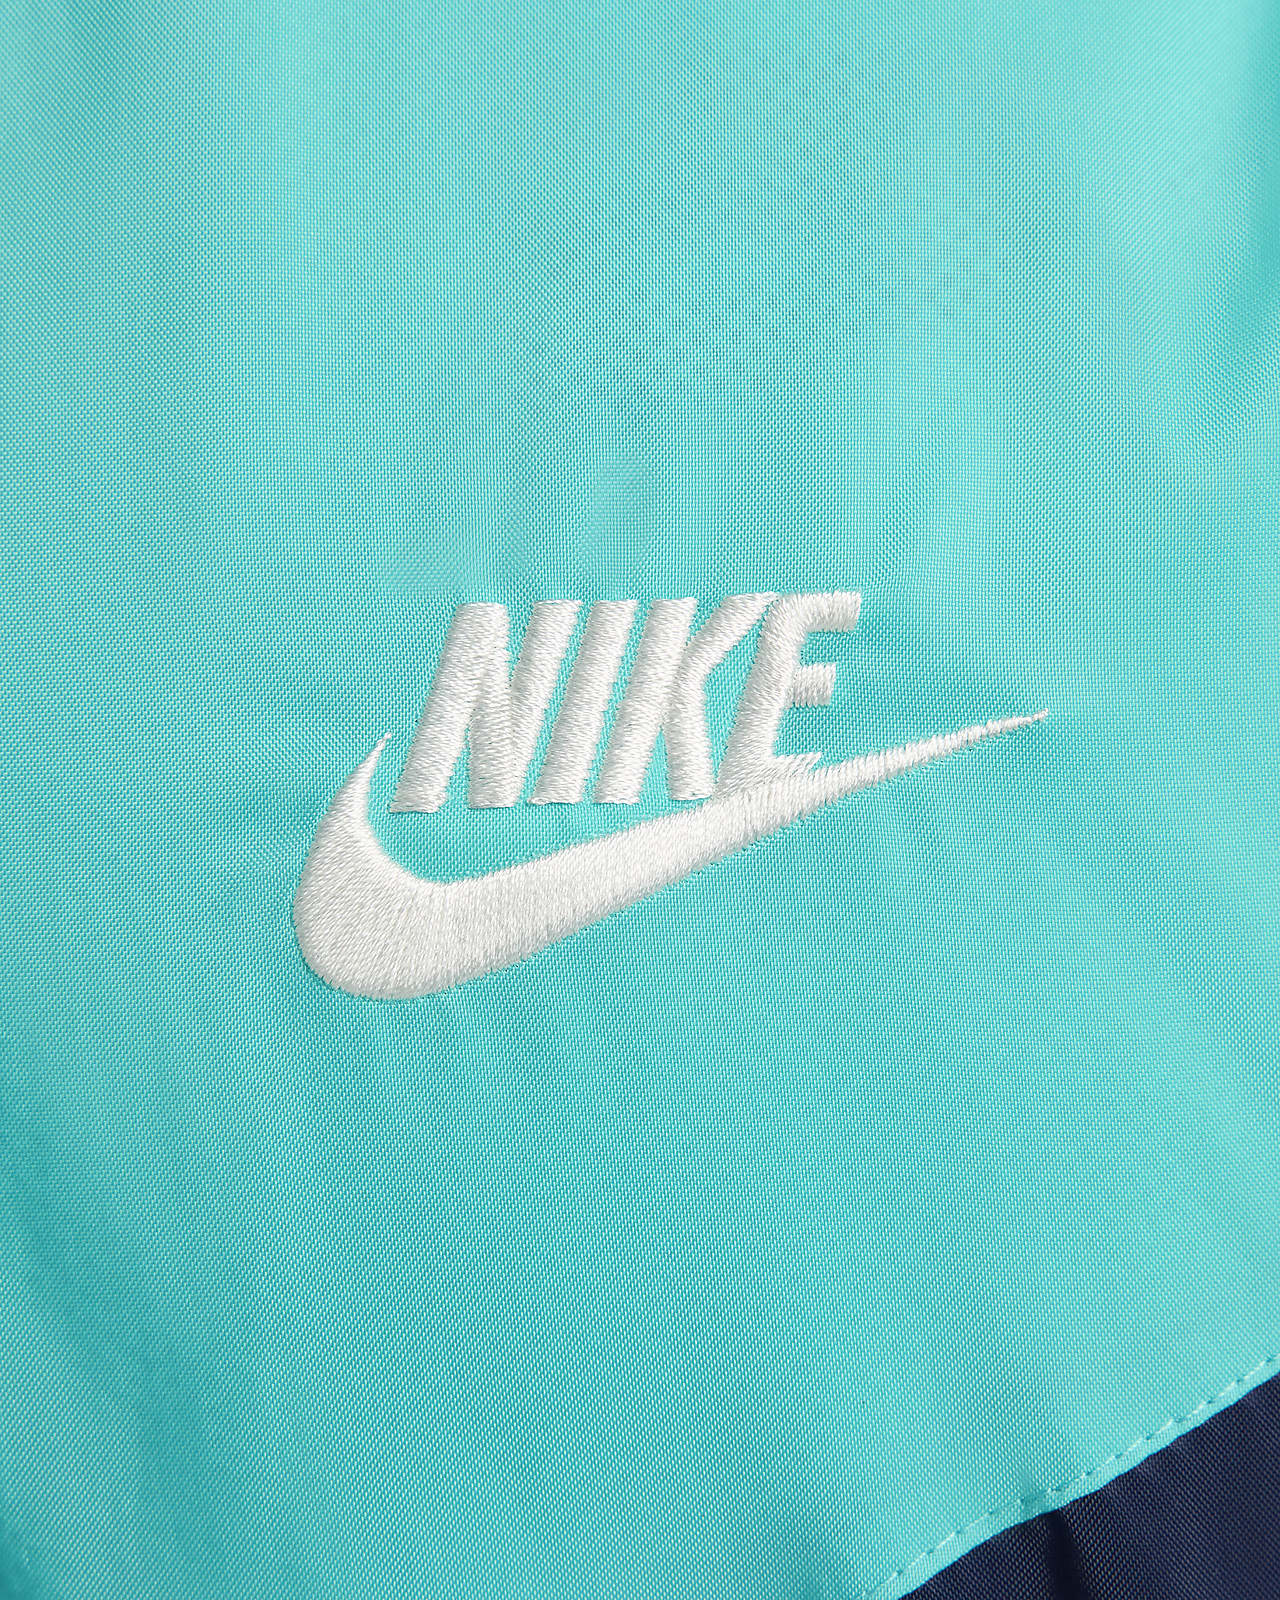 Nike - Men - Woven Land Windrunner Jacket - Khaki/Medium Olive